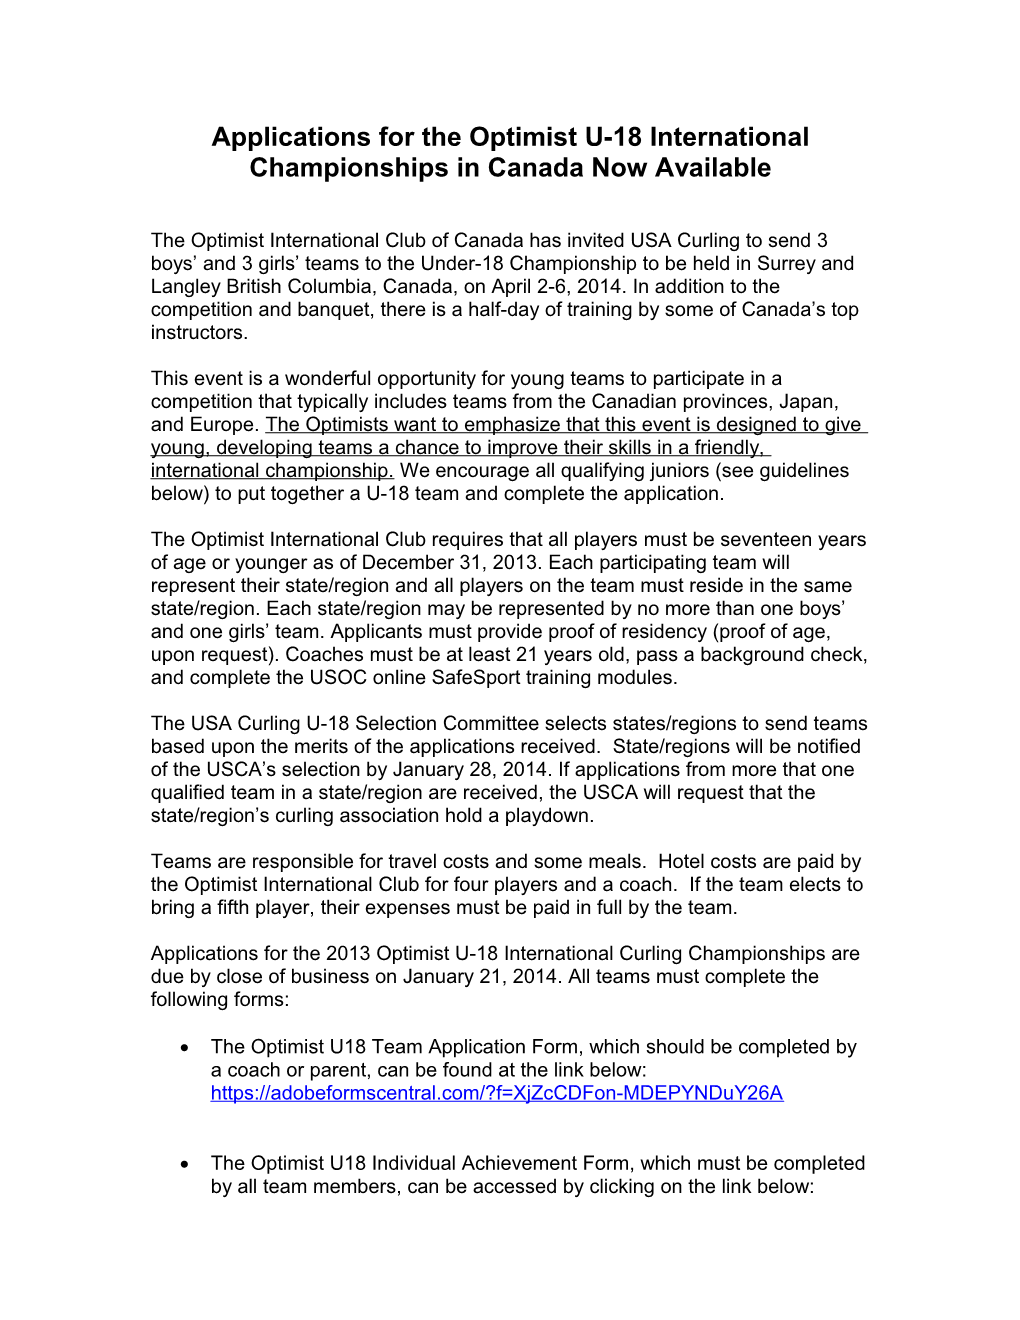 Optimist U-18 International Championships Applications Due Dec 8Th